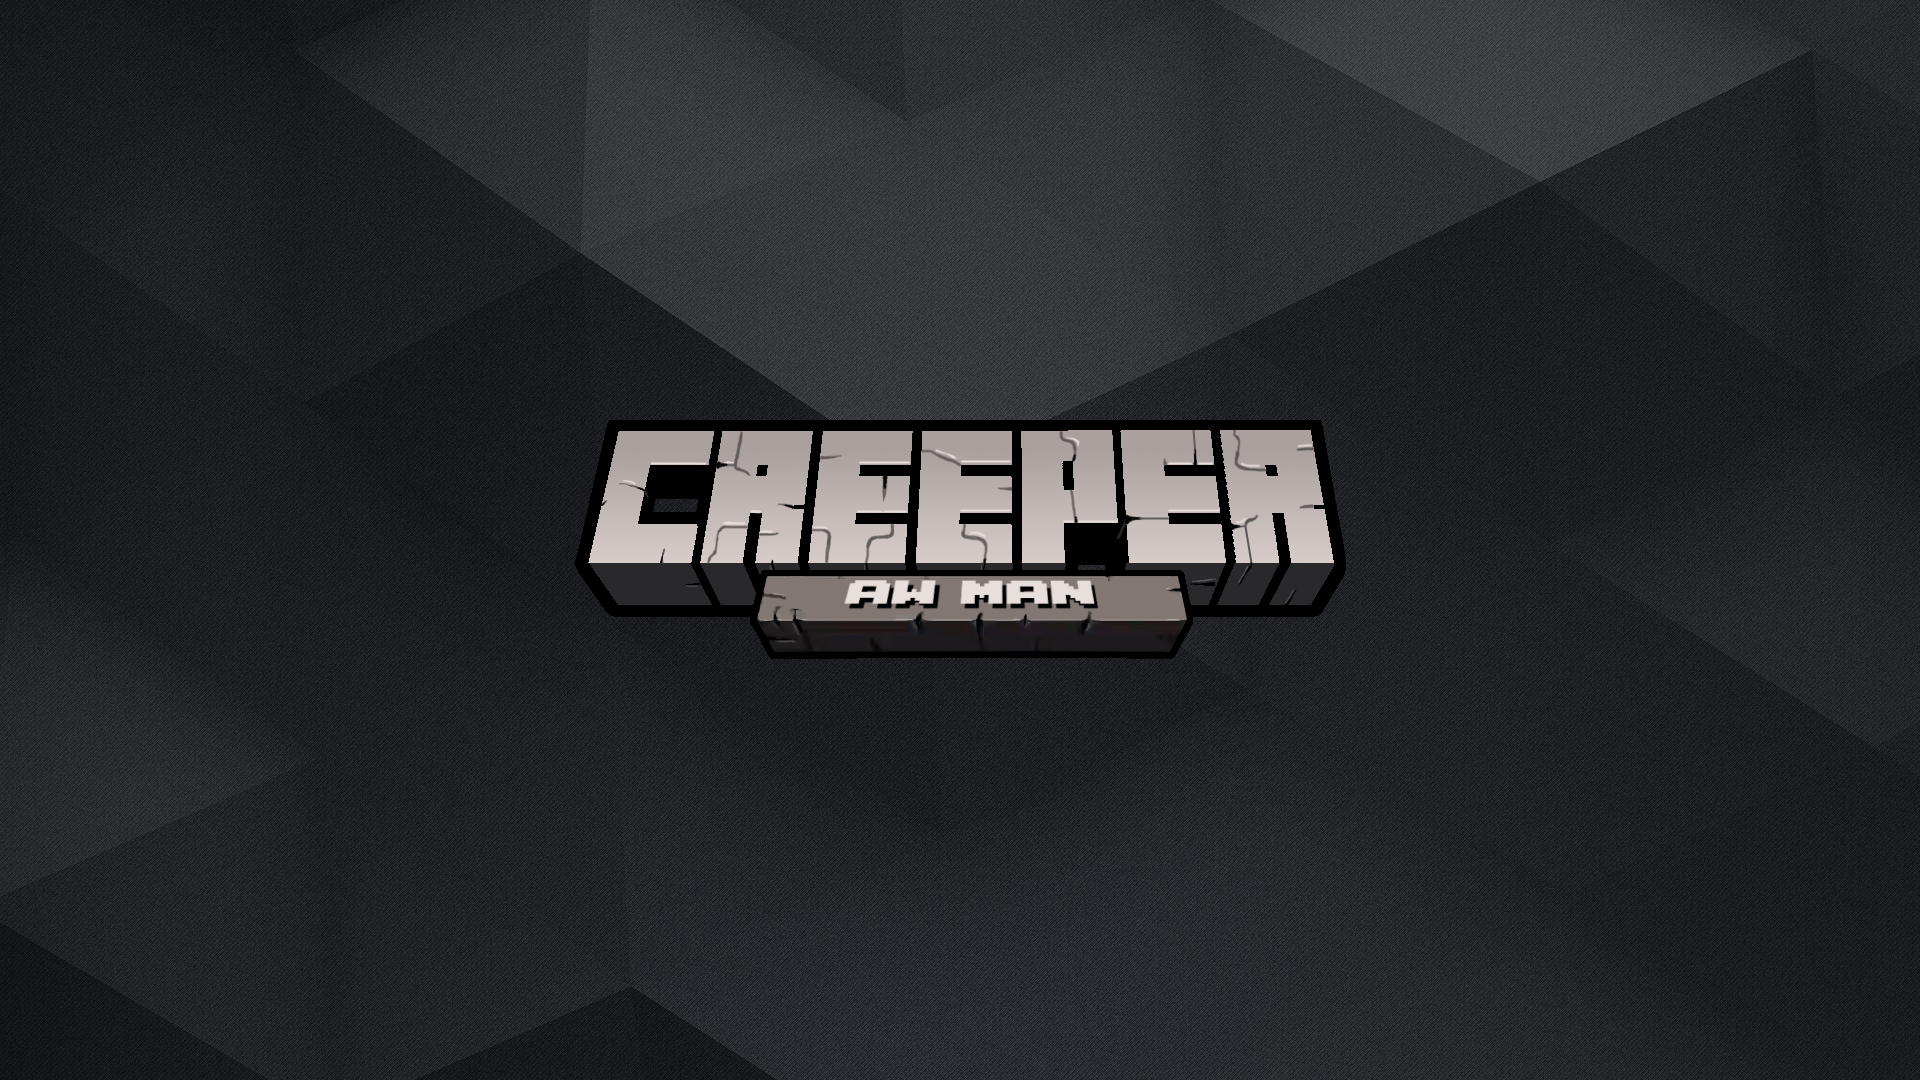 Creeper aww man wallpapers